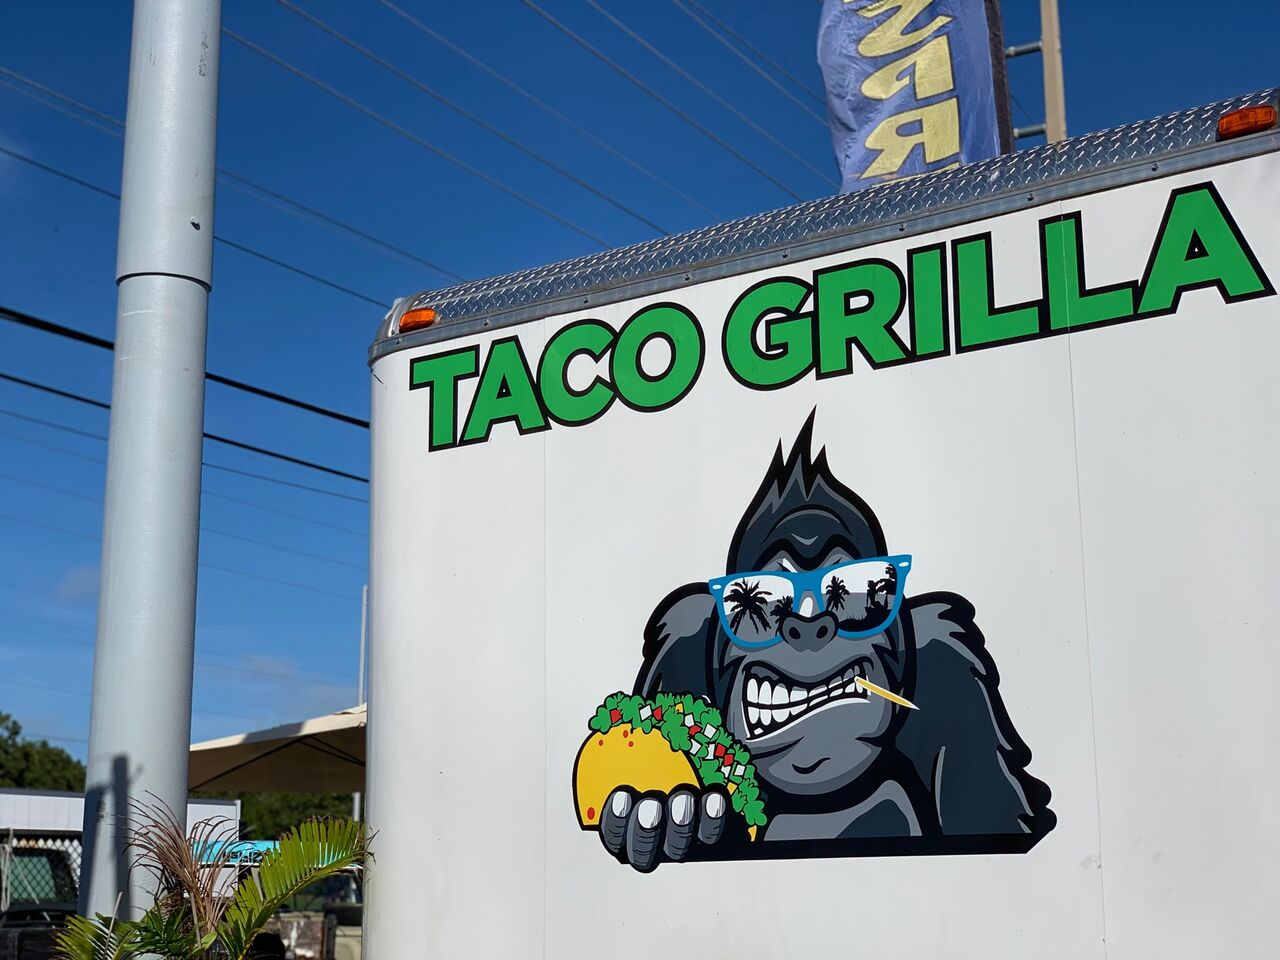 A photo of Taco Grilla